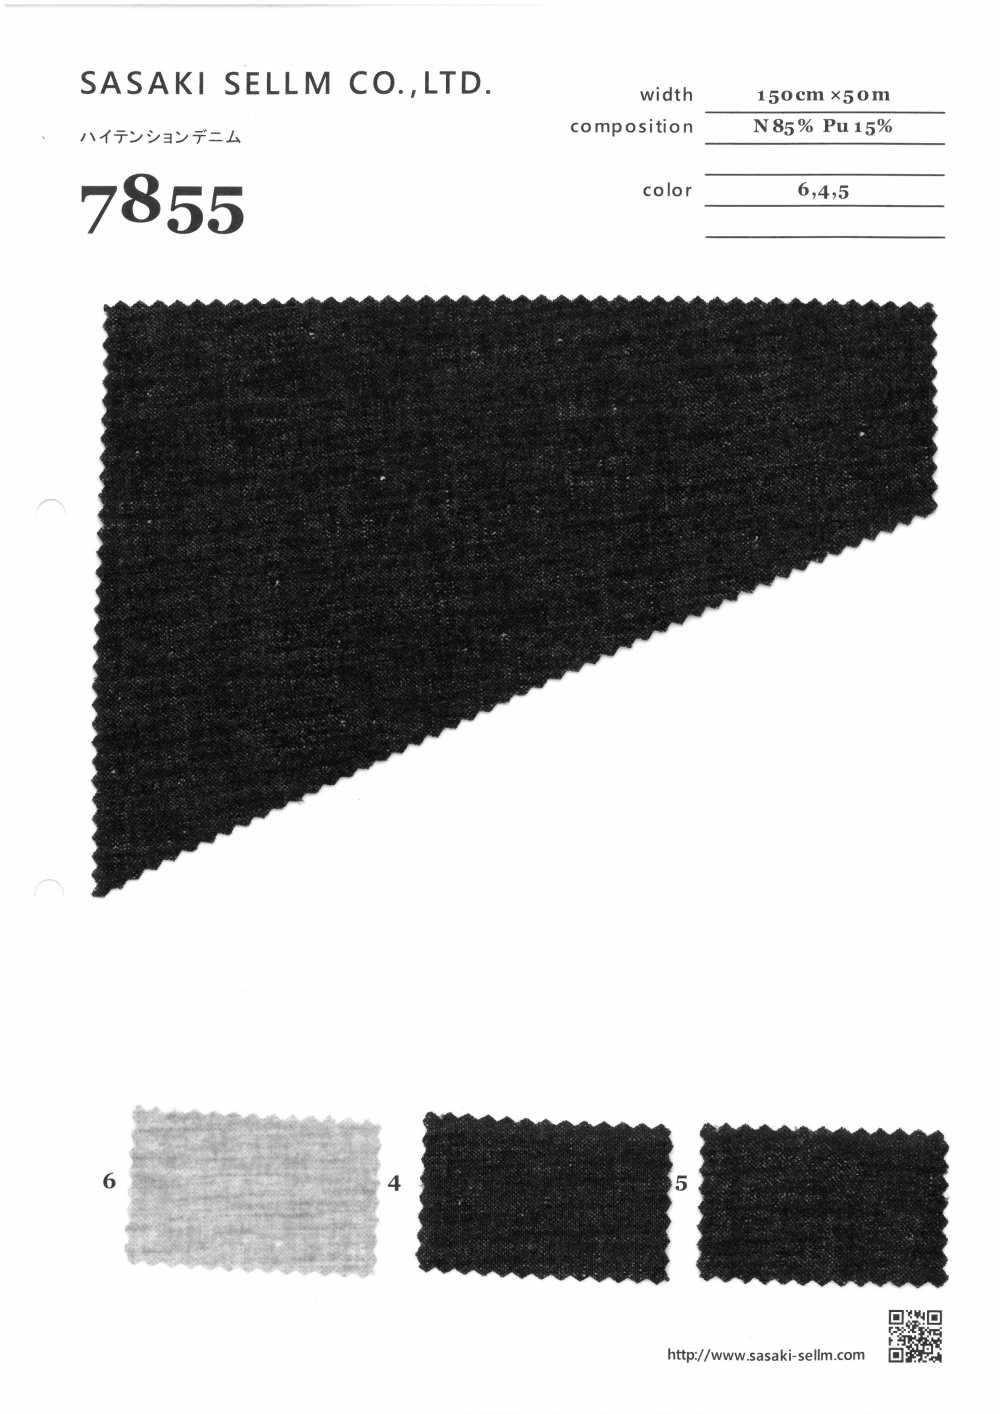 7855 Summer Denim[Textile / Fabric] SASAKISELLM